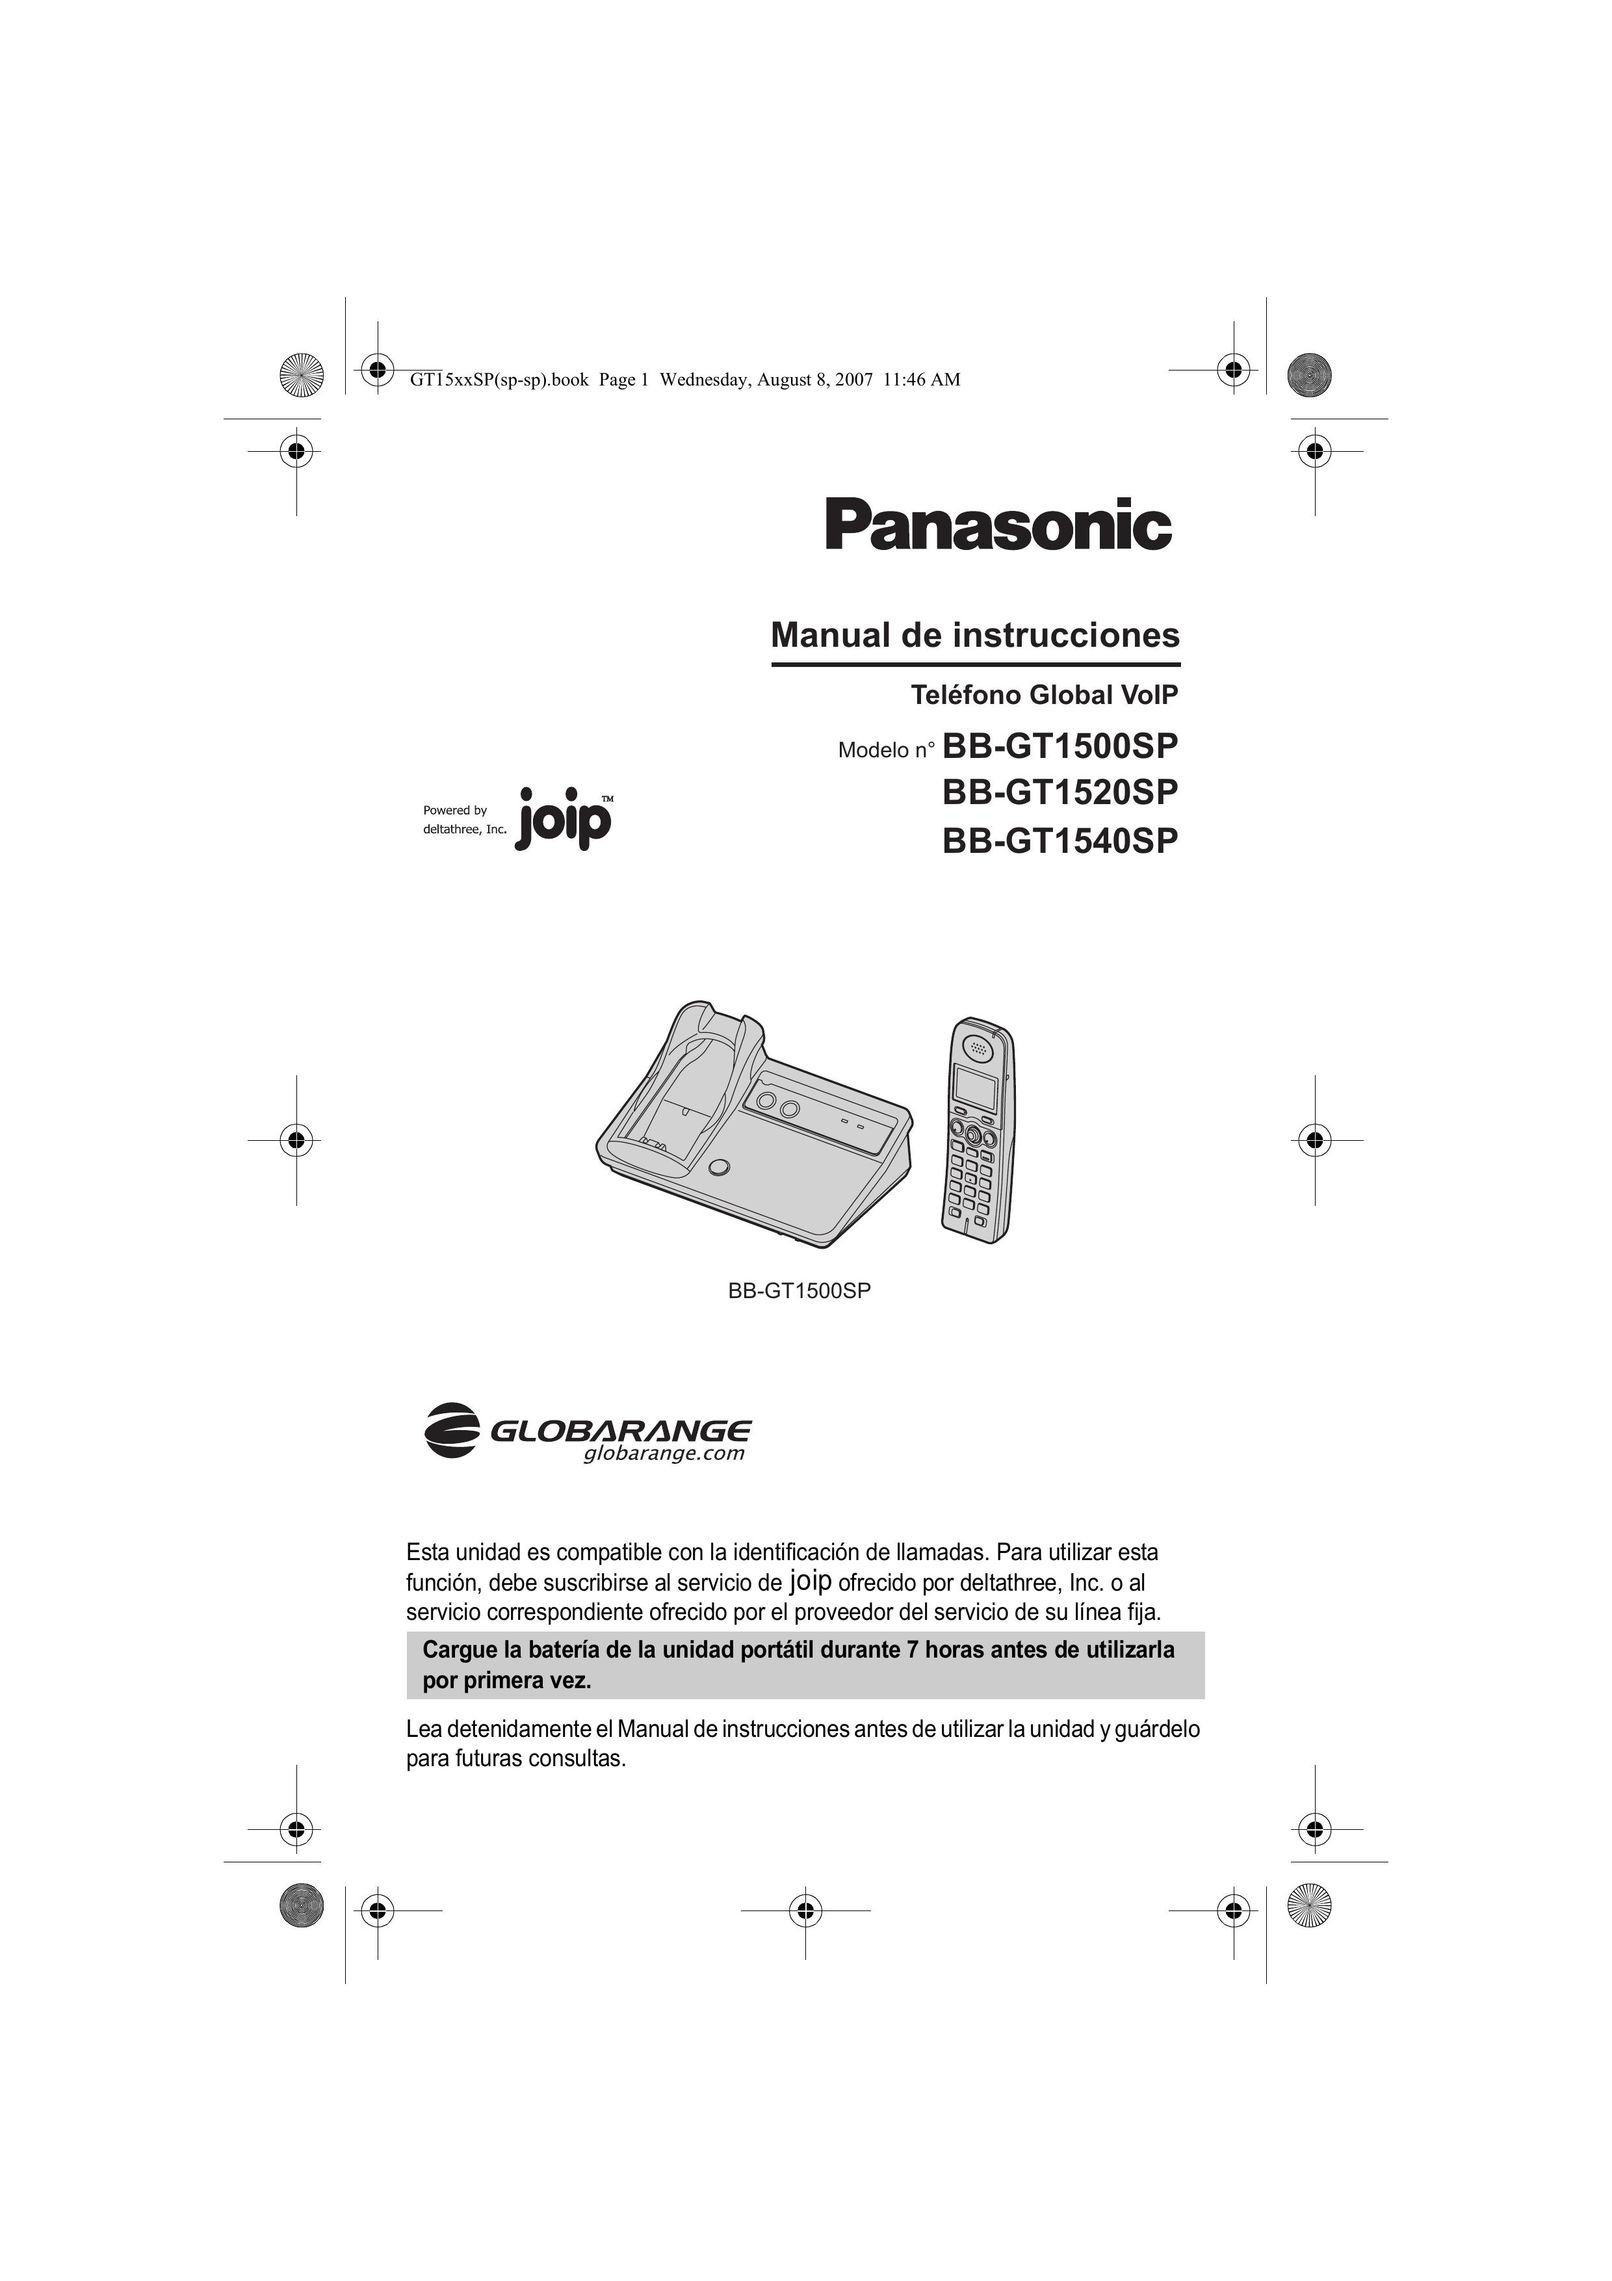 Panasonic BB-GT1540SP Telephone User Manual